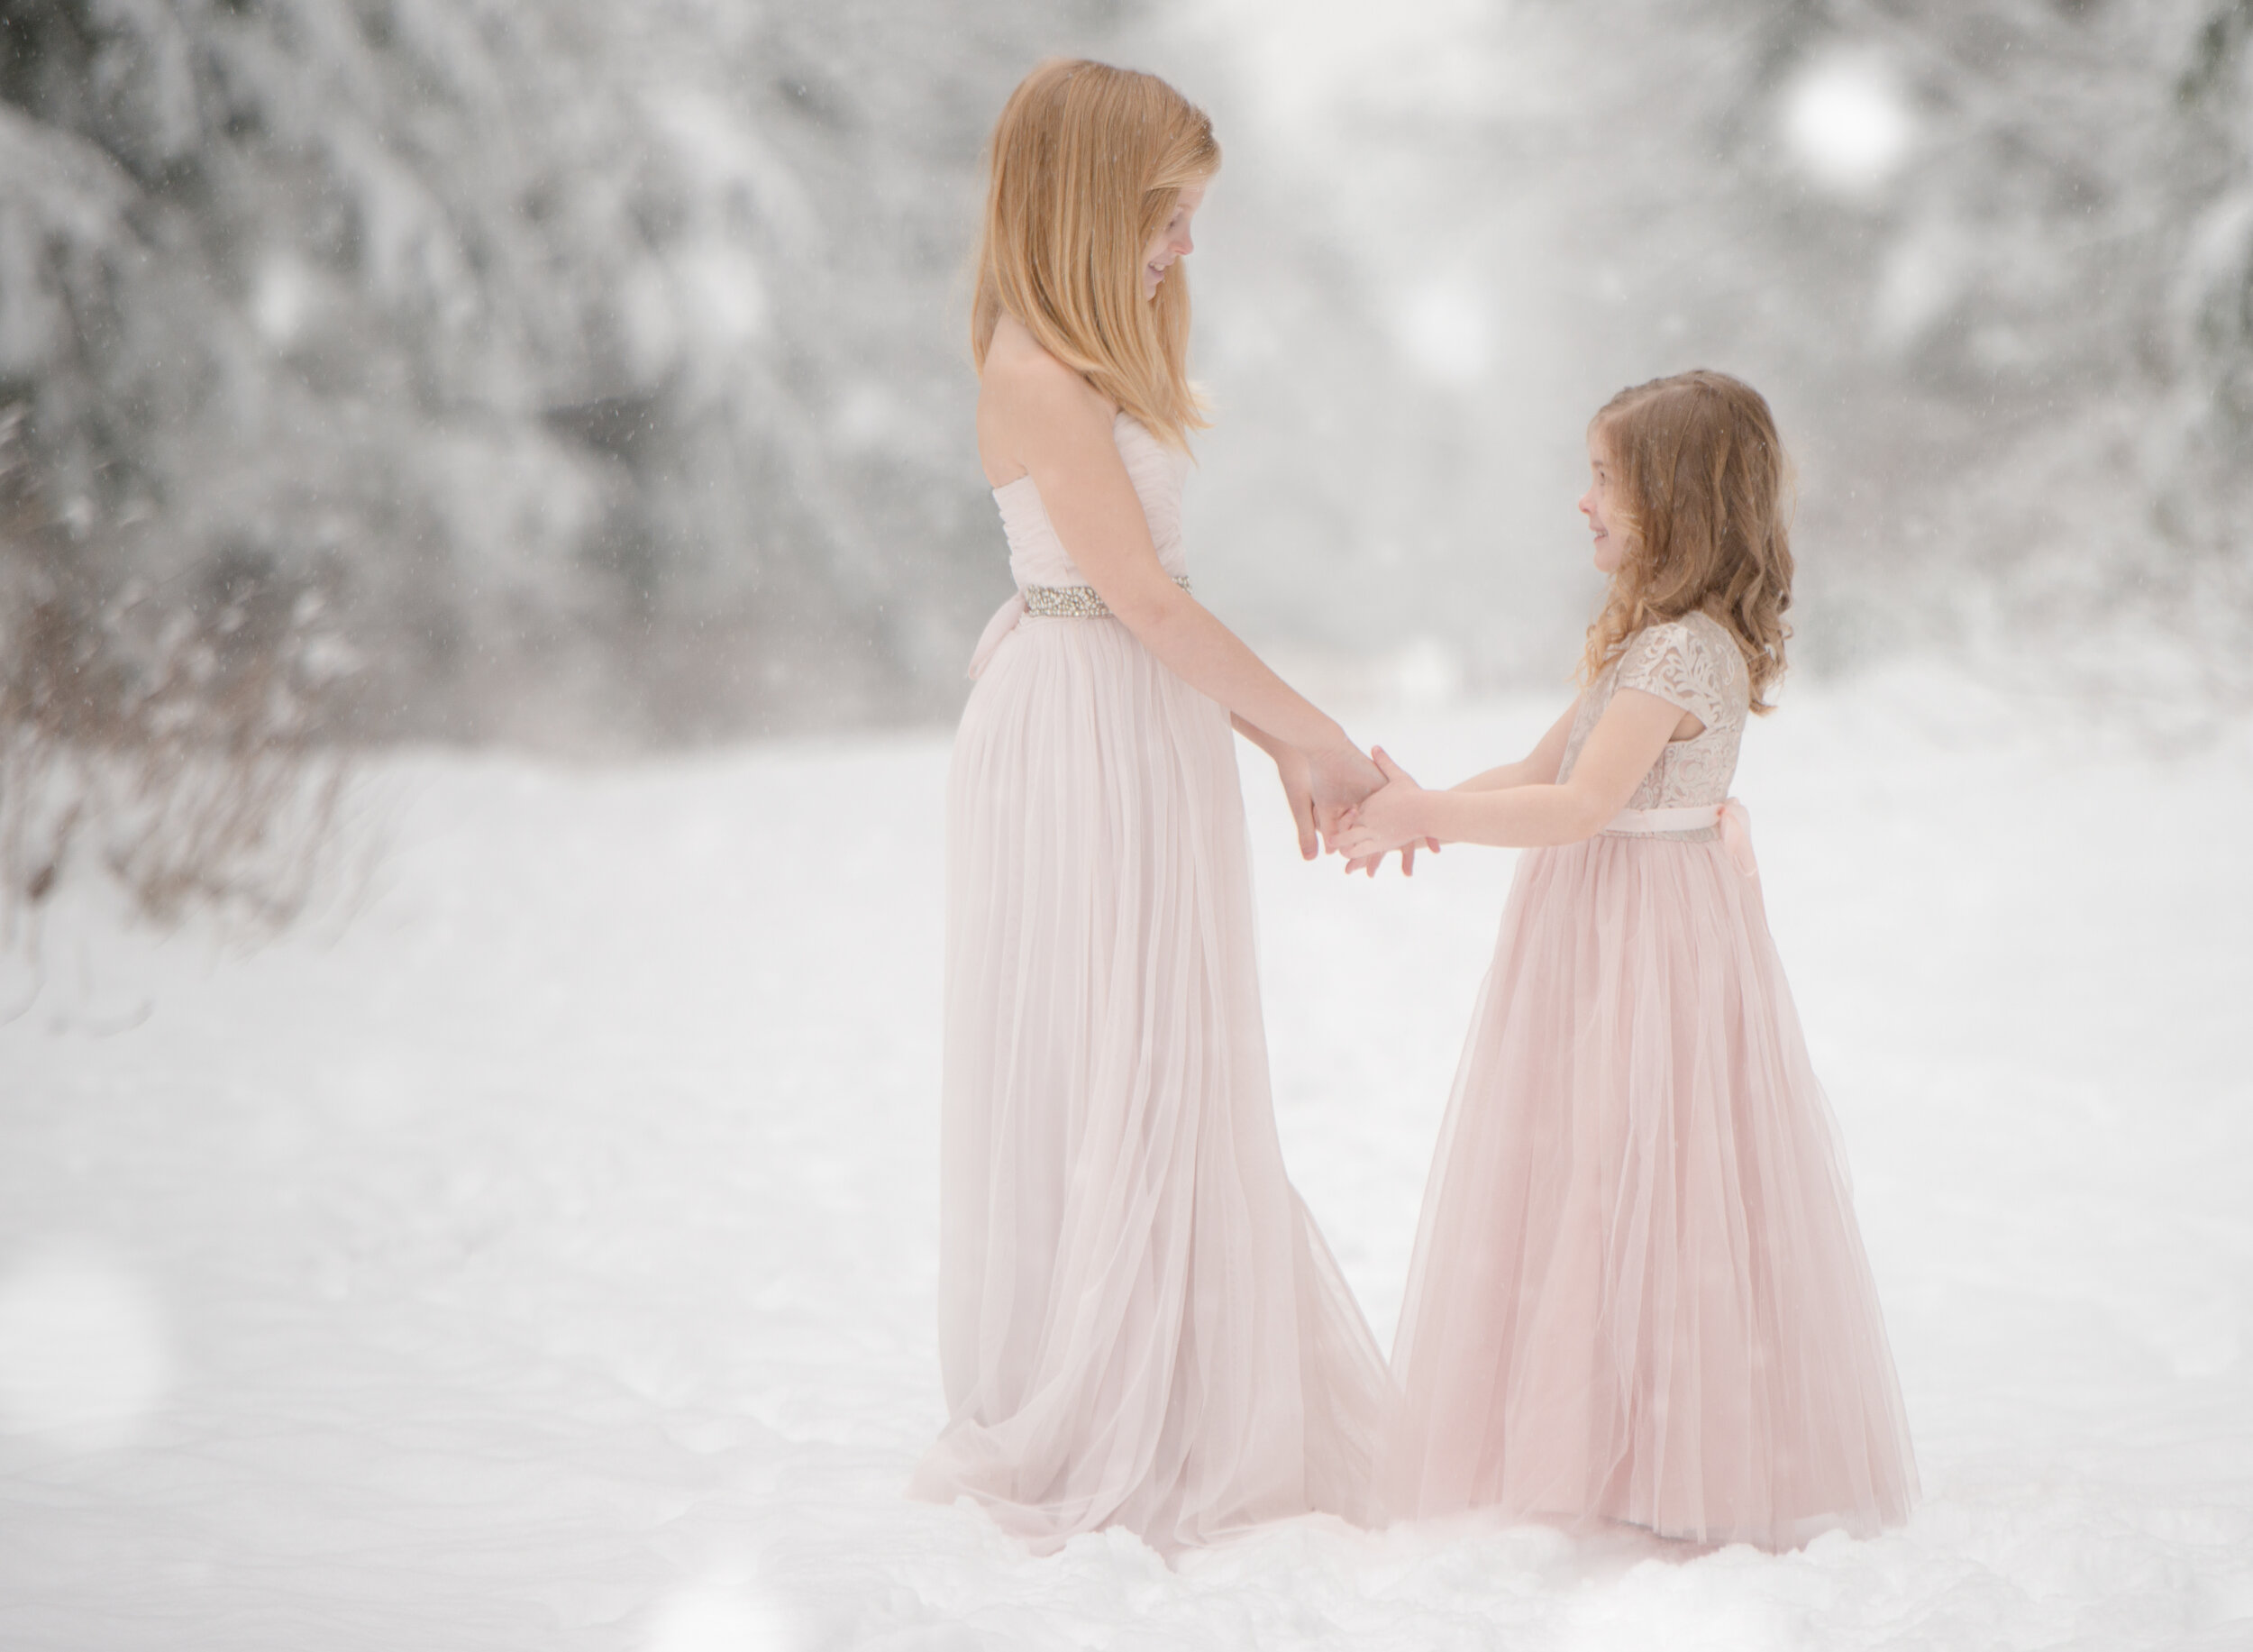 Snow Princesses